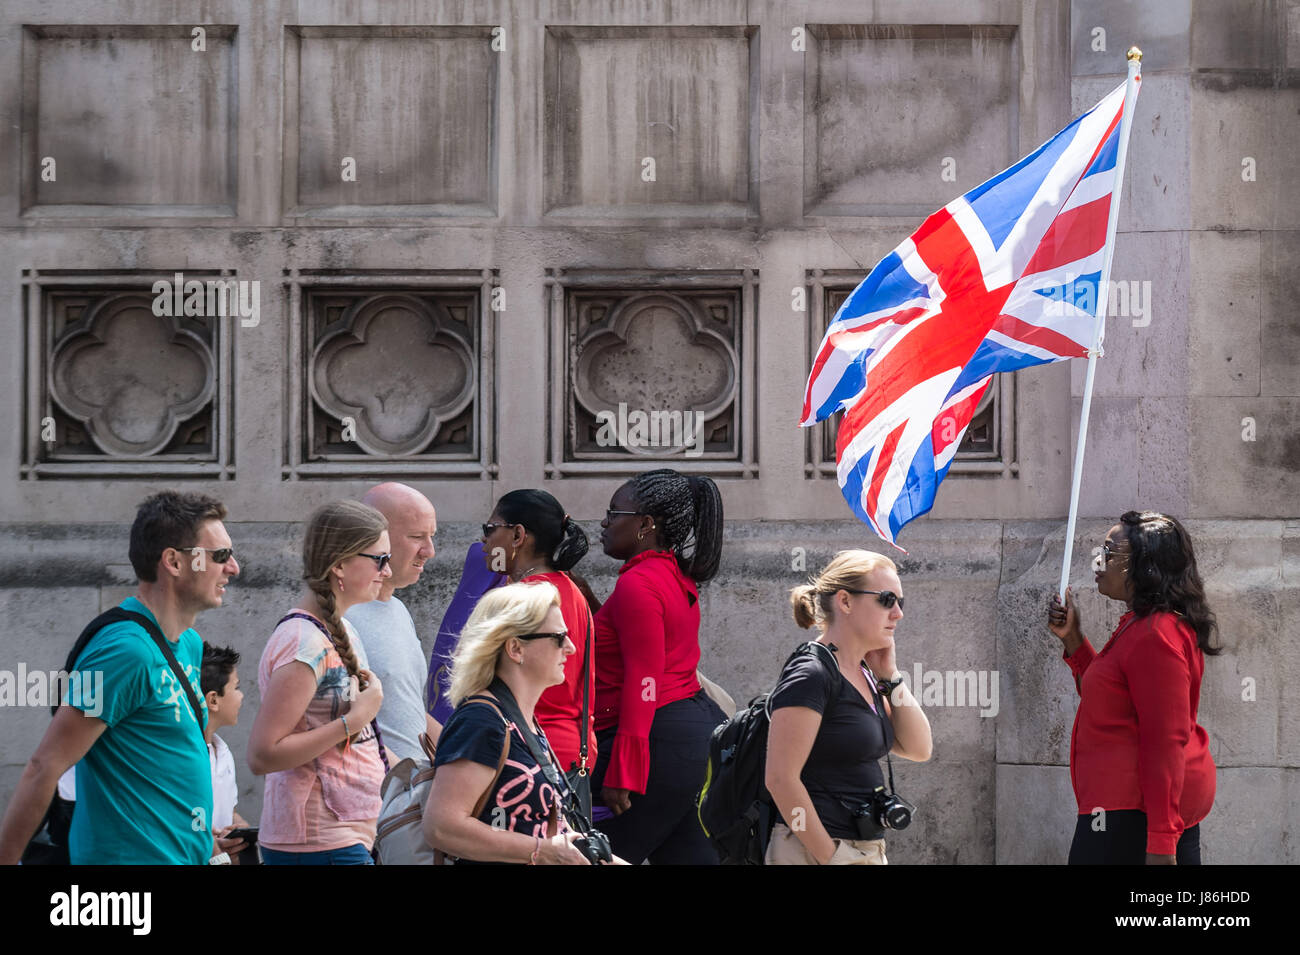 London, UK. 27th May, 2017. Christian movement ‘Wailing Women Worldwide’ march through Westminster Guy Corbishley/Alamy Live News Stock Photo